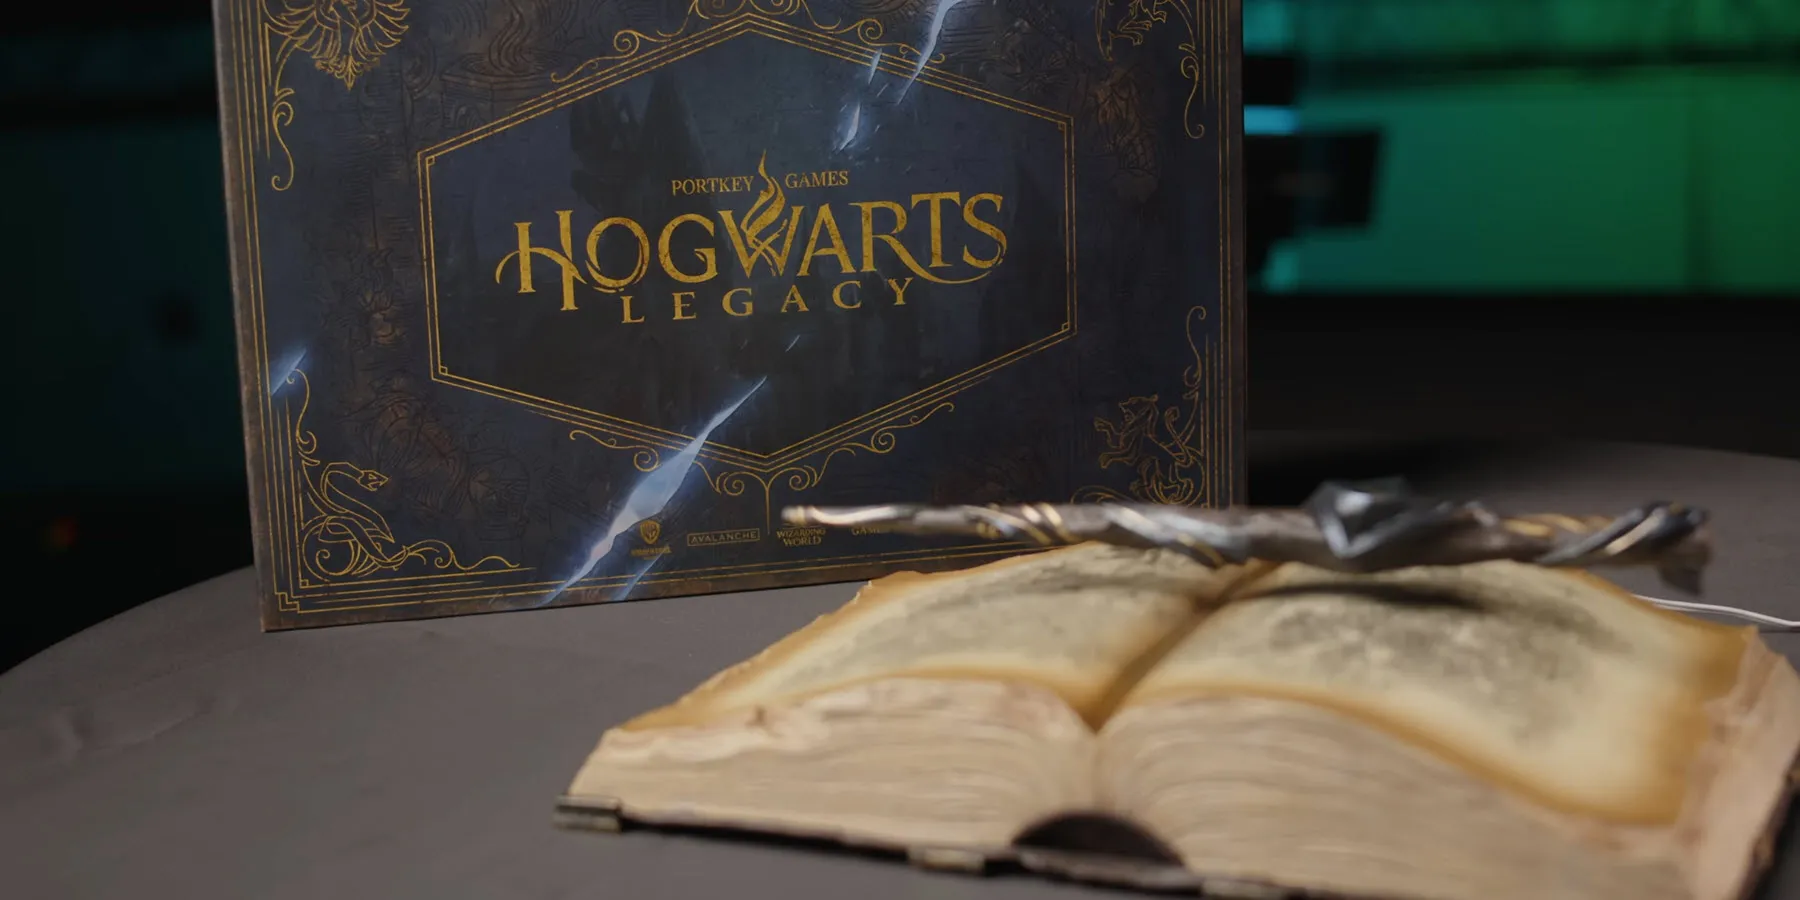 hogwarts legacy collectors edition